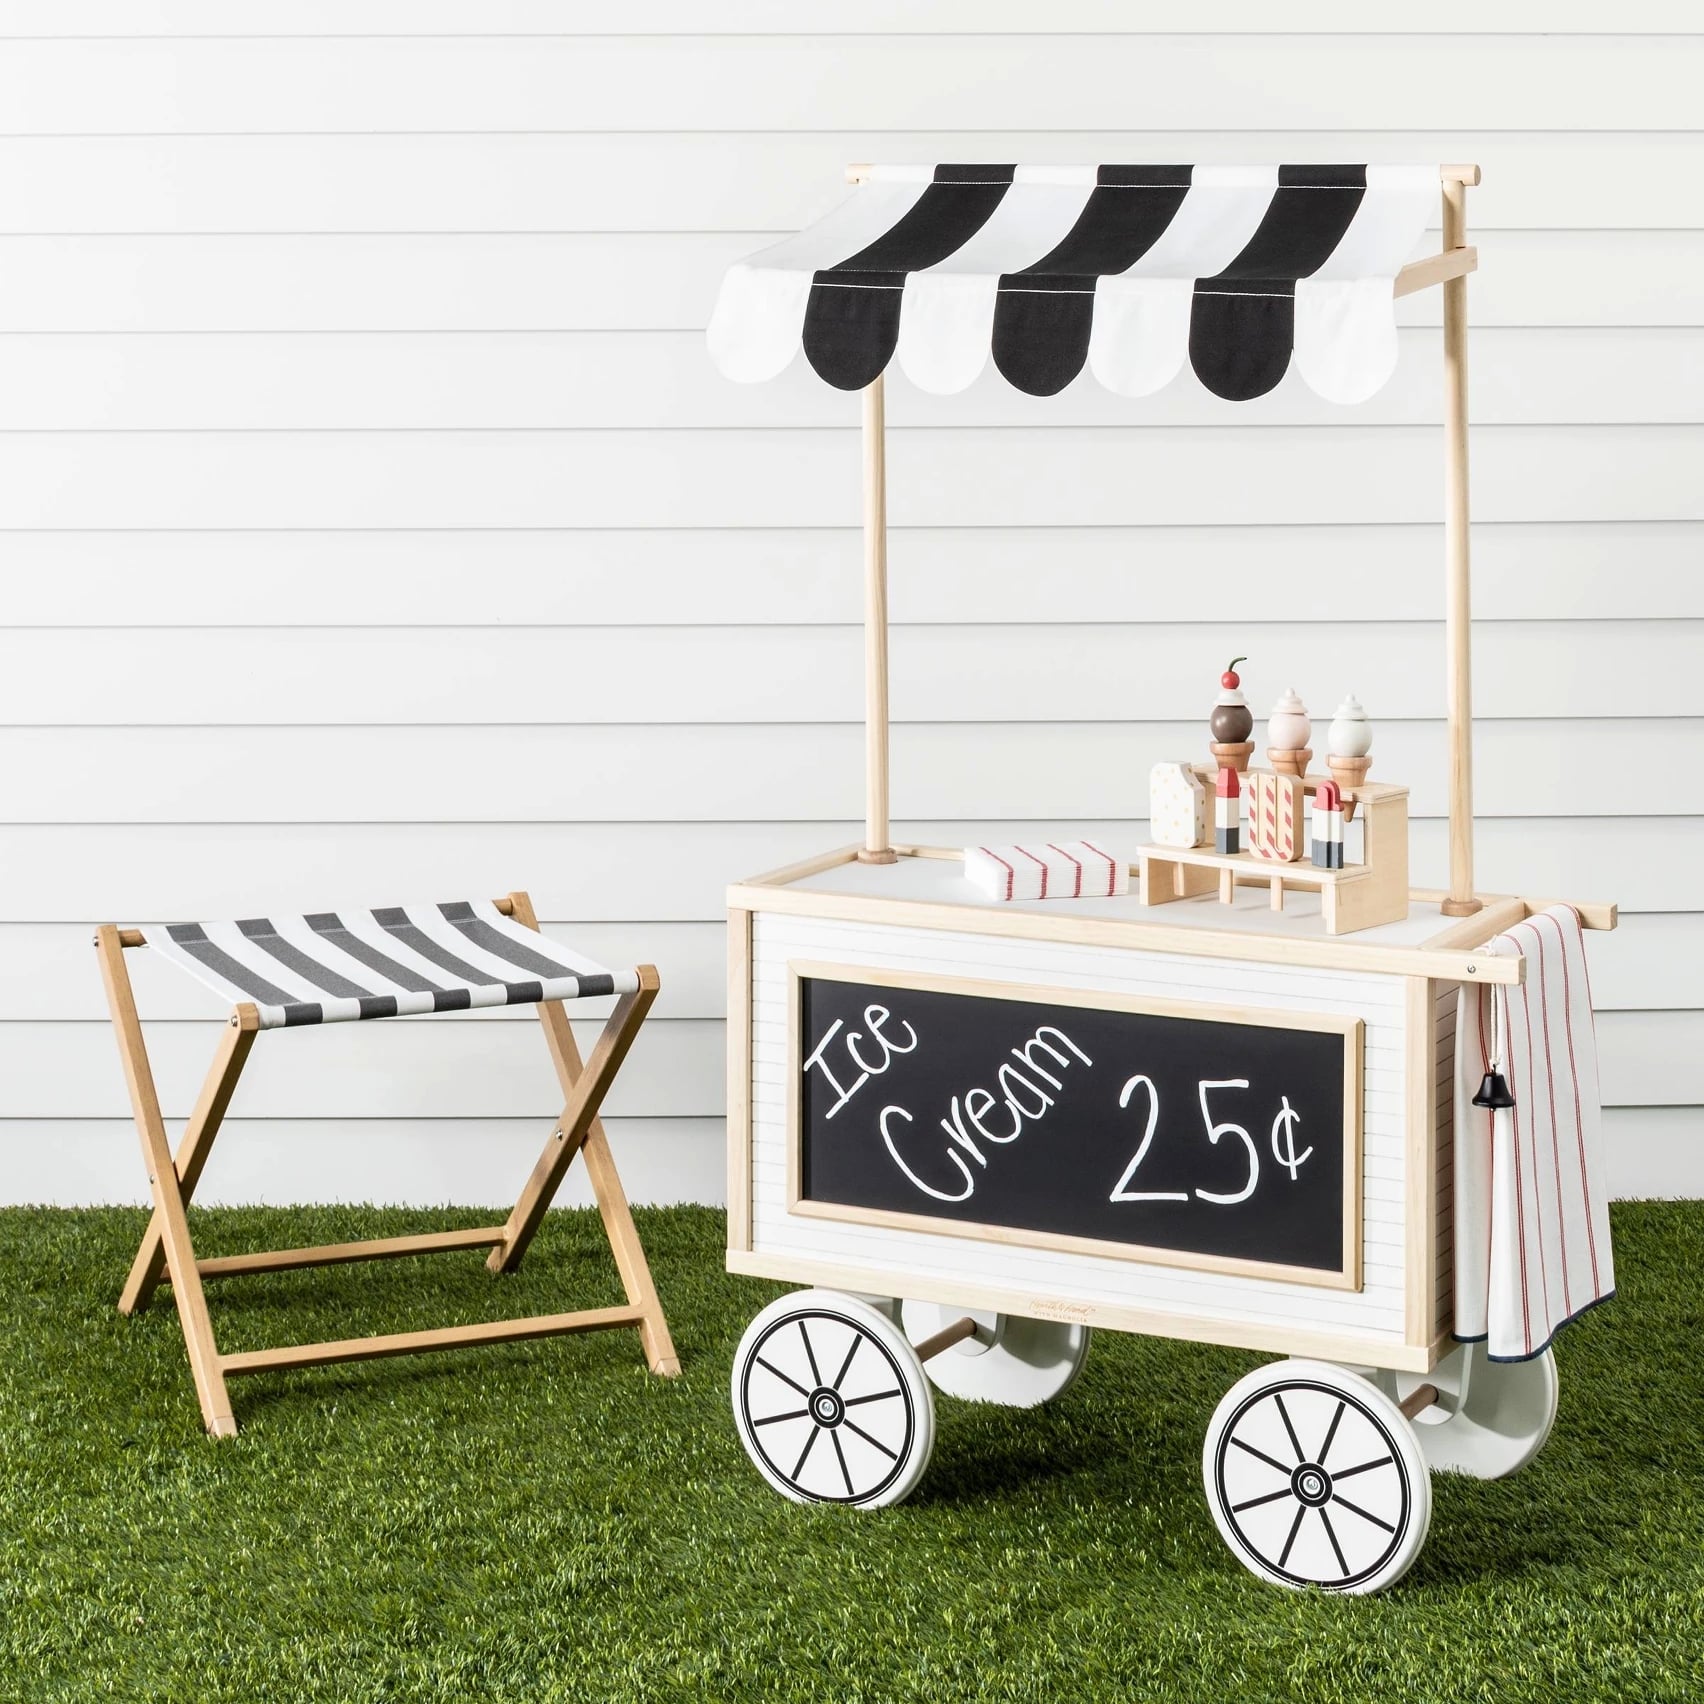 wooden cart for kids